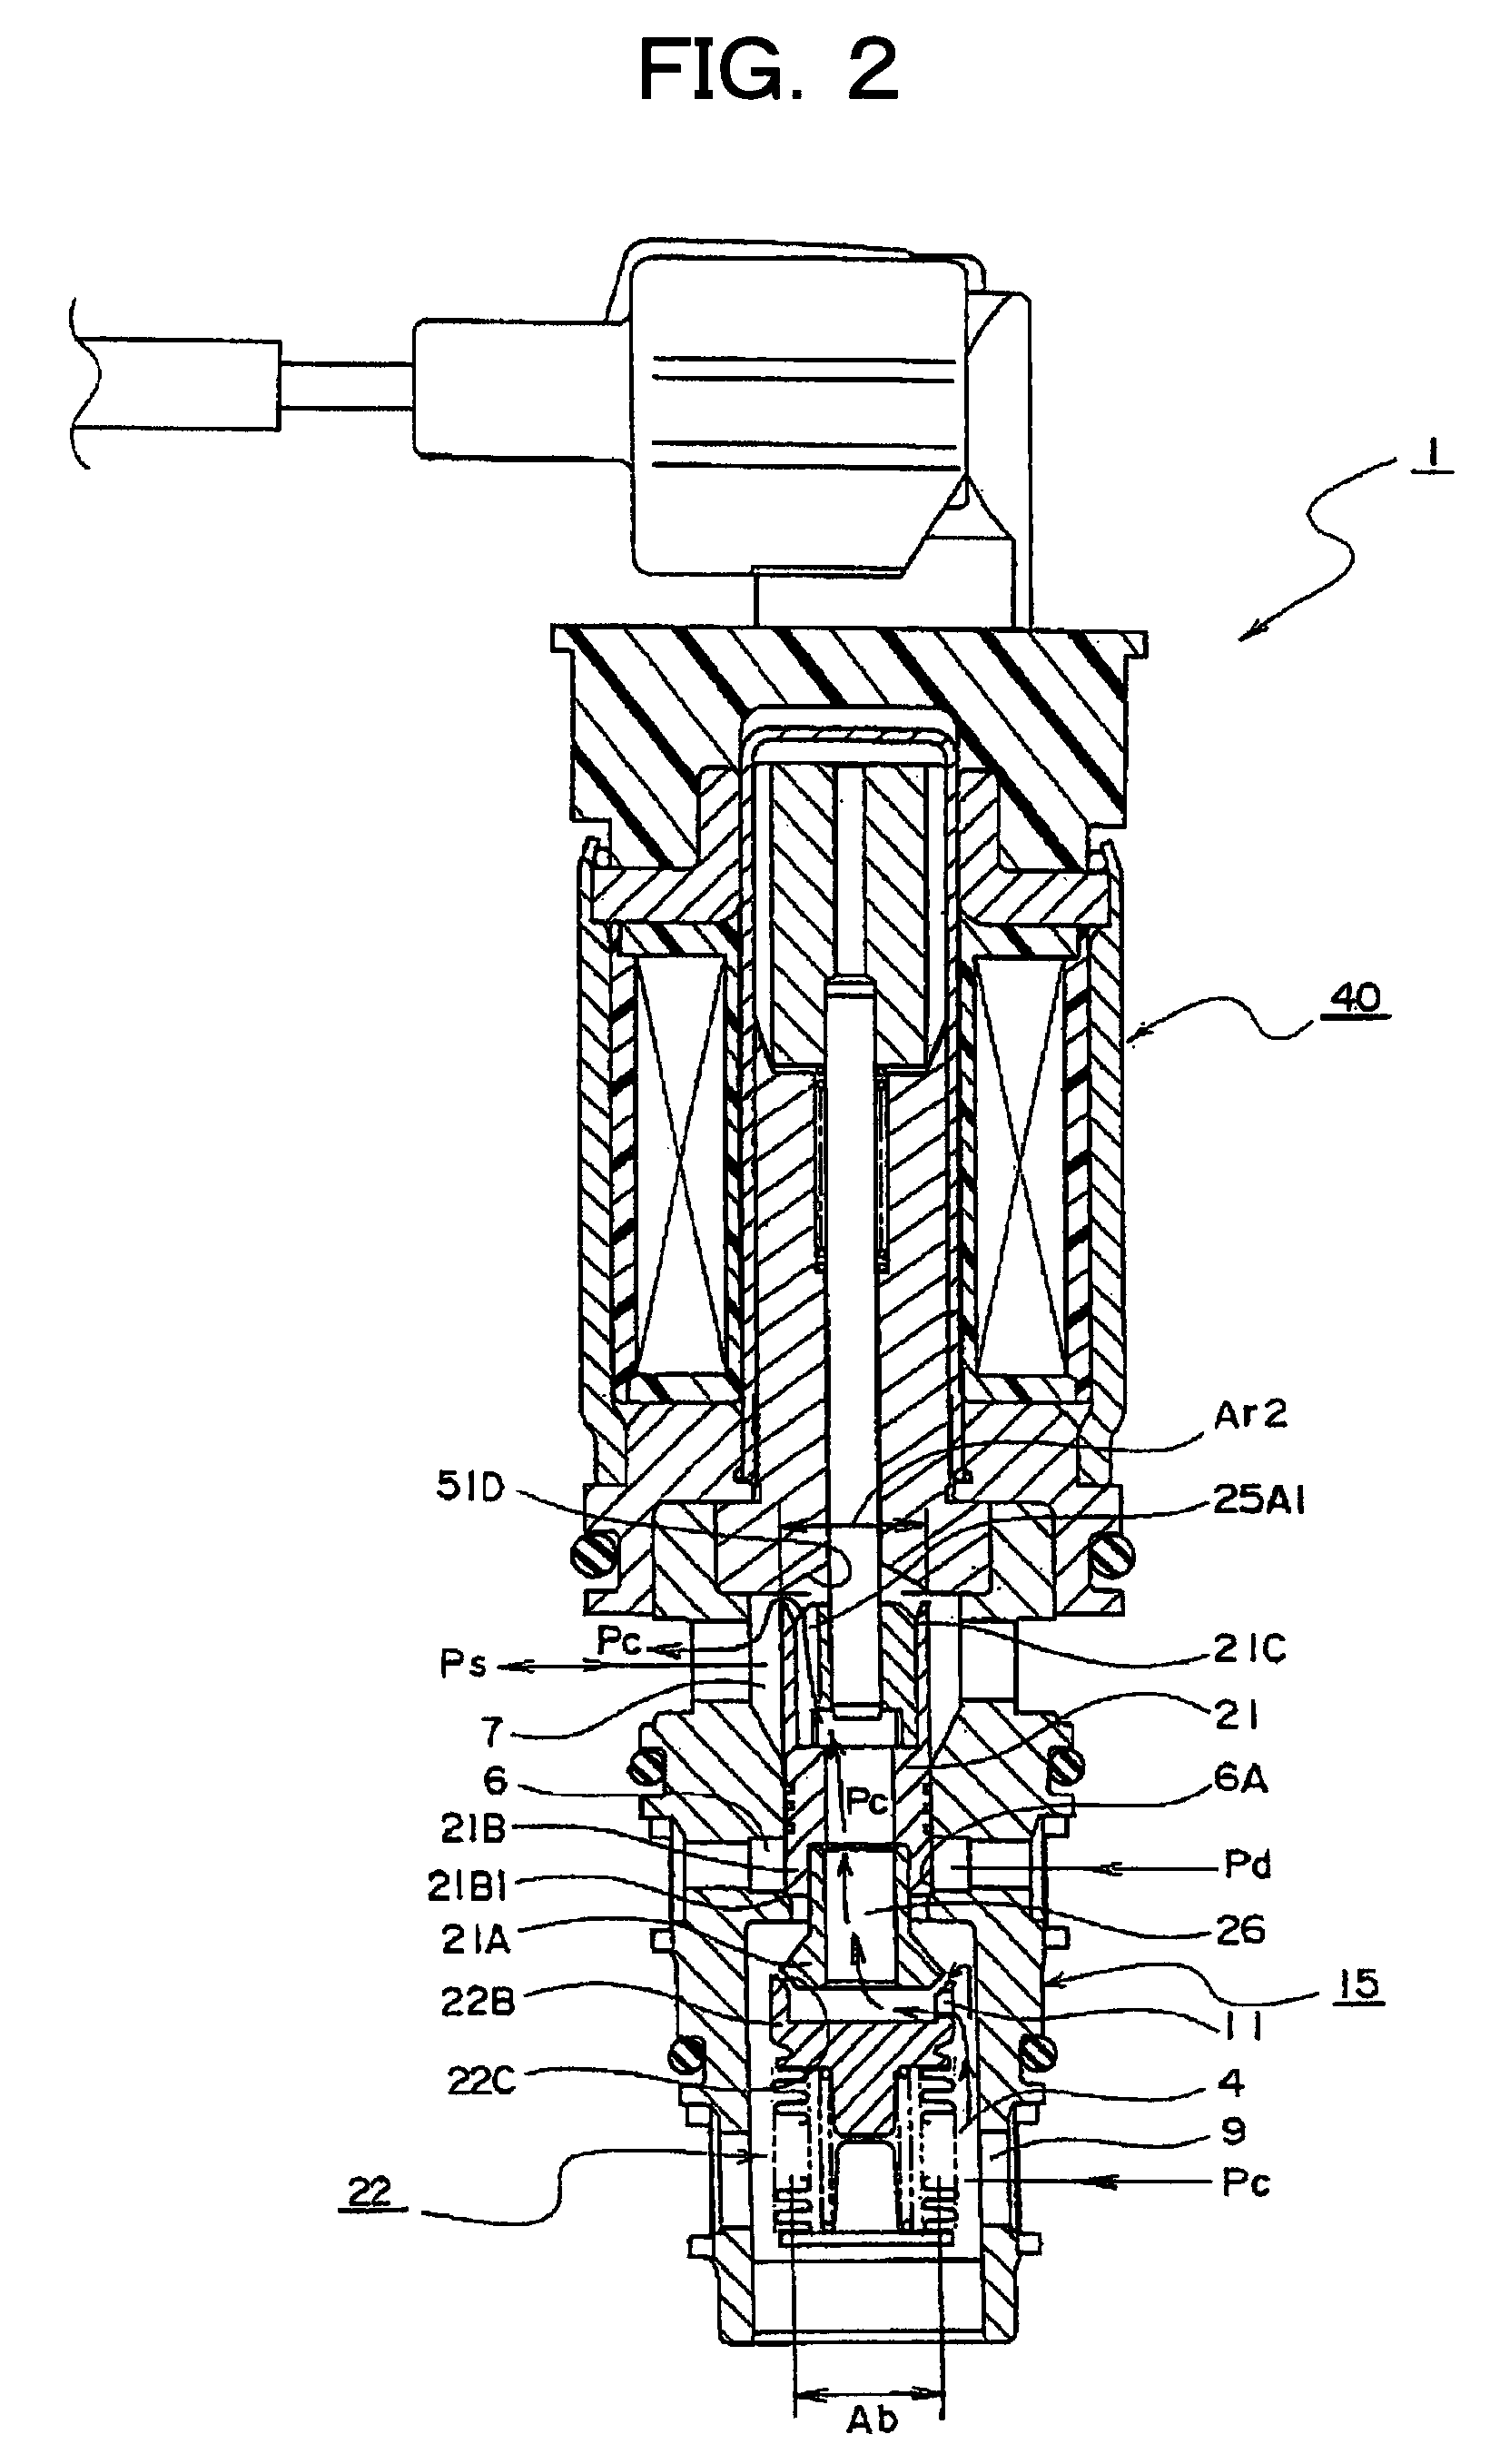 Displacement control valve